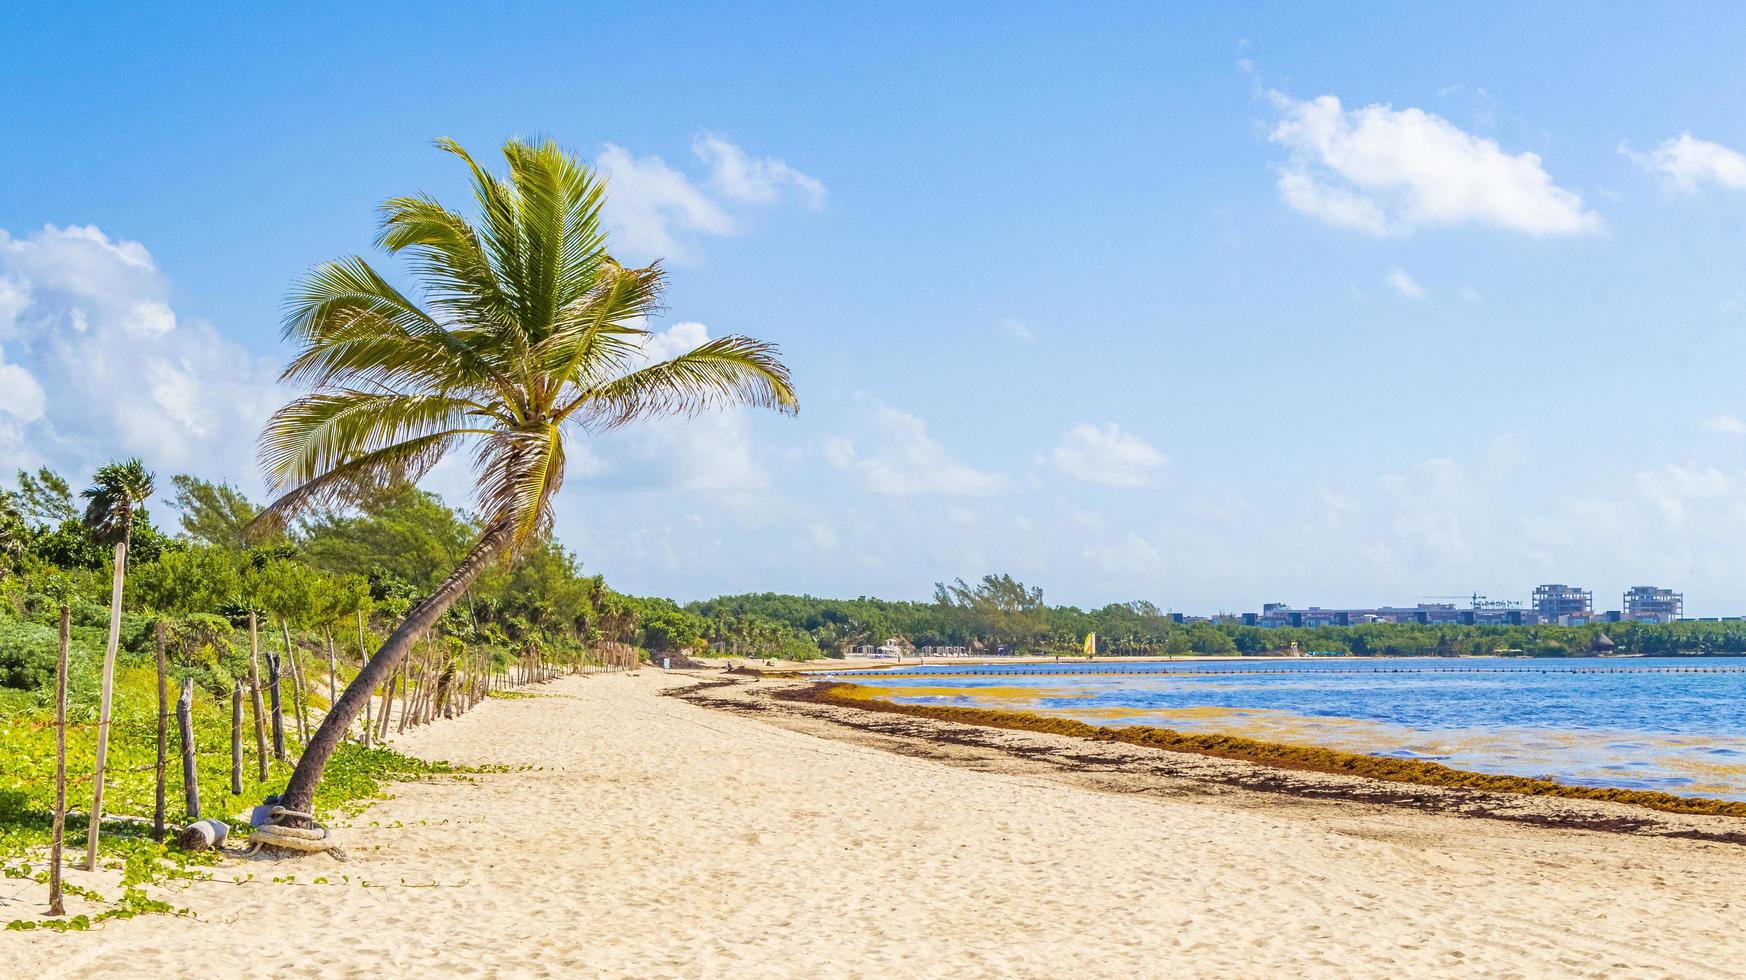 tropisch Mexicaans strand met palmbomen playa del carmen mexico foto